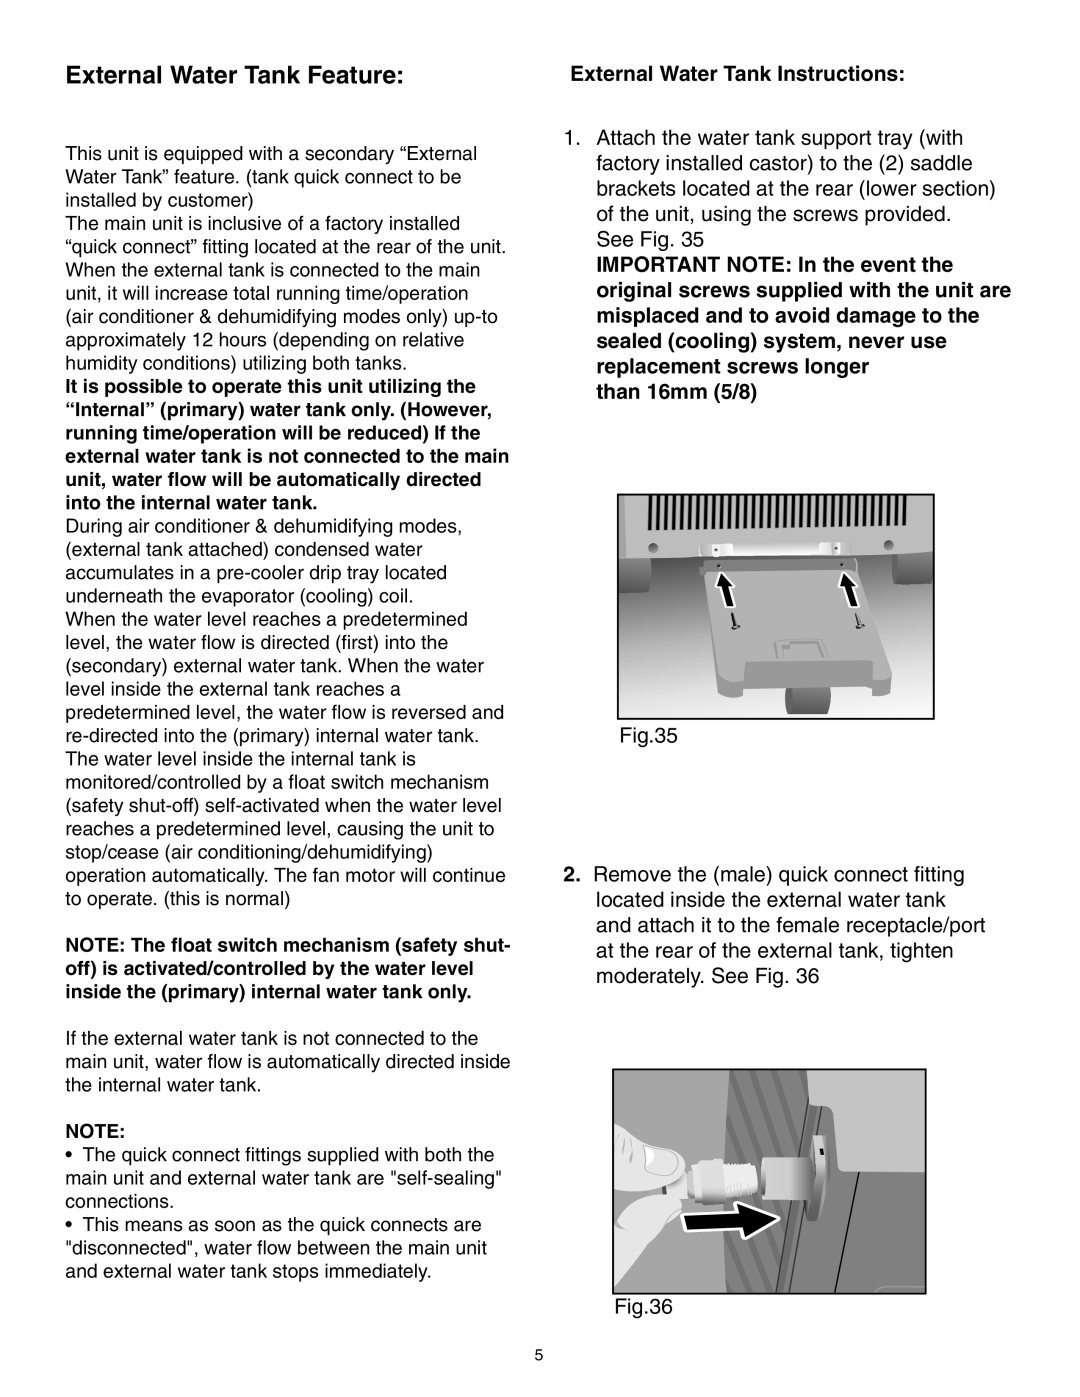 Danby SPAC8499 manual External Water Tank Feature, External Water Tank Instructions, than 16mm 5/8 